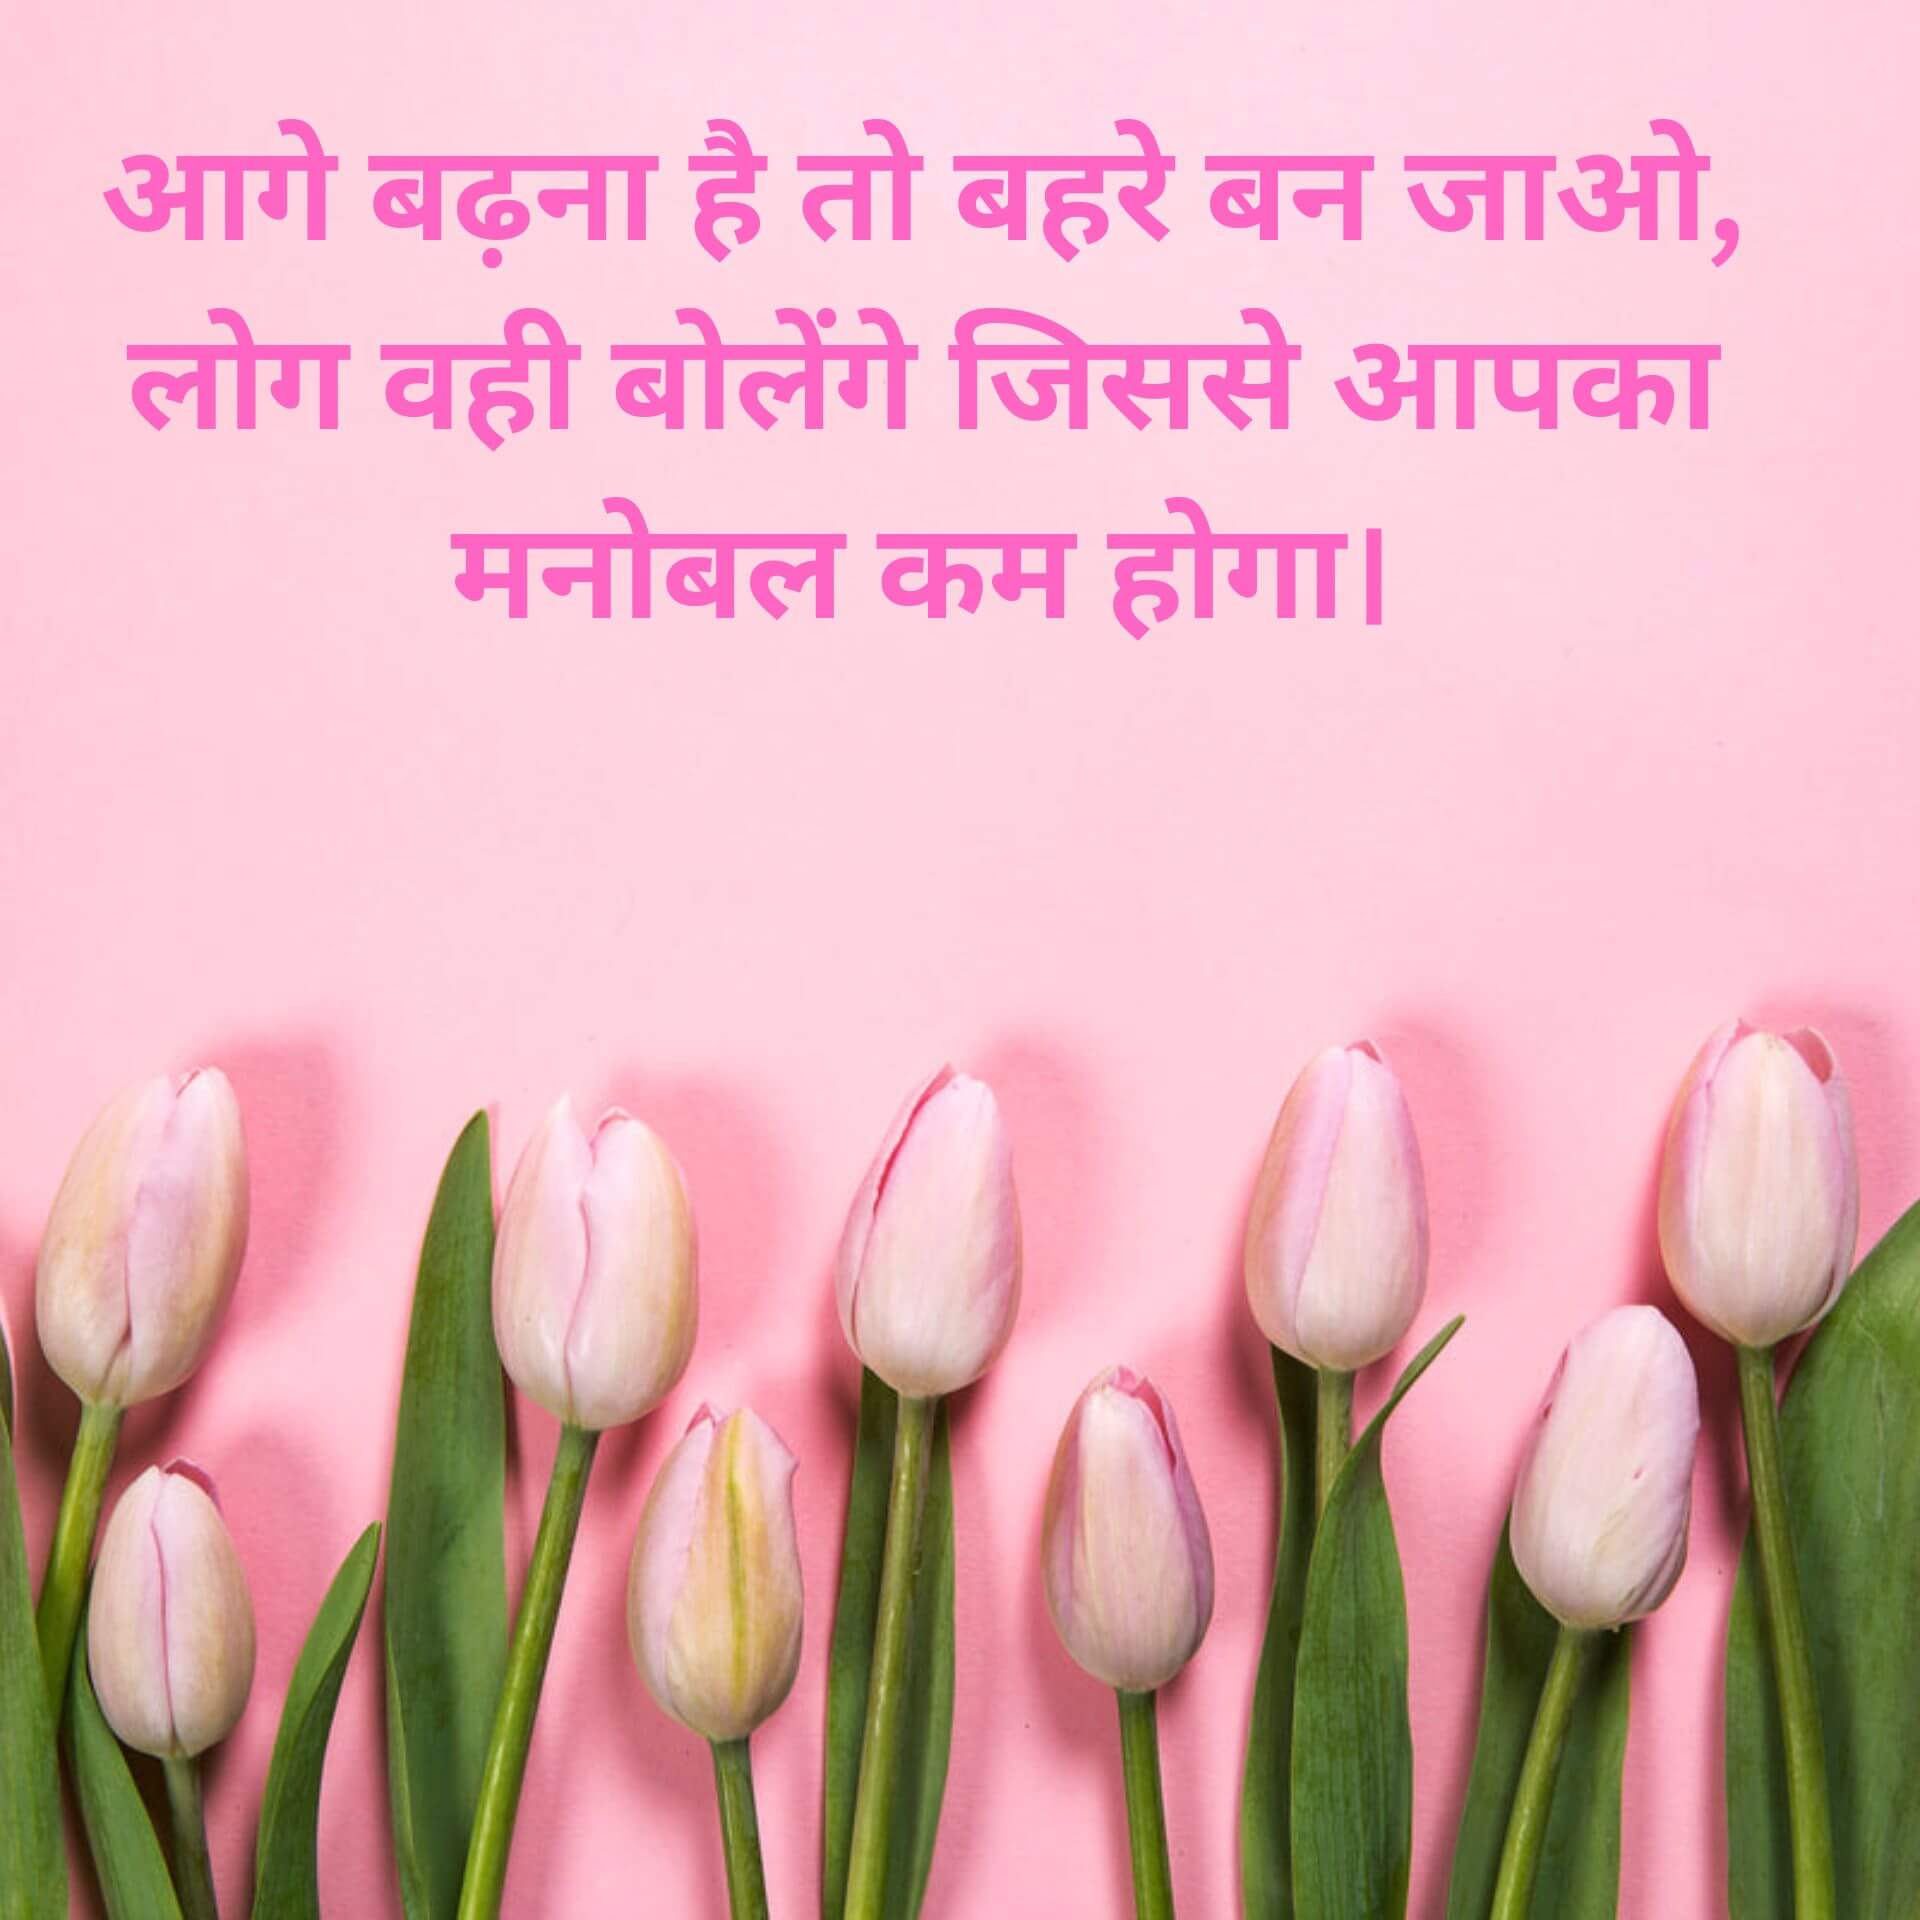 Free Hindi Motivational Quotes Wallpaper Download